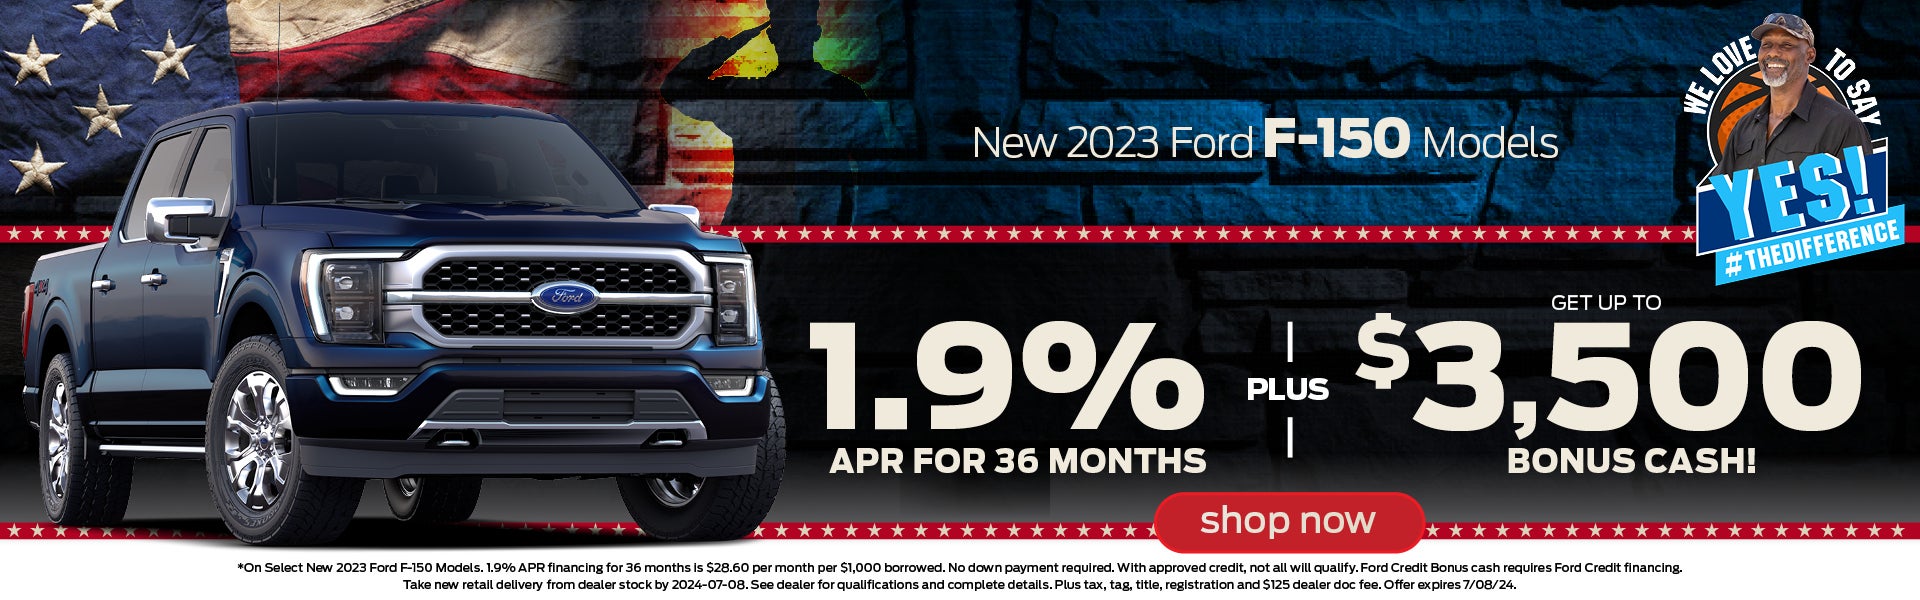 New 2023 Ford F-150 Models in El Dorado AR